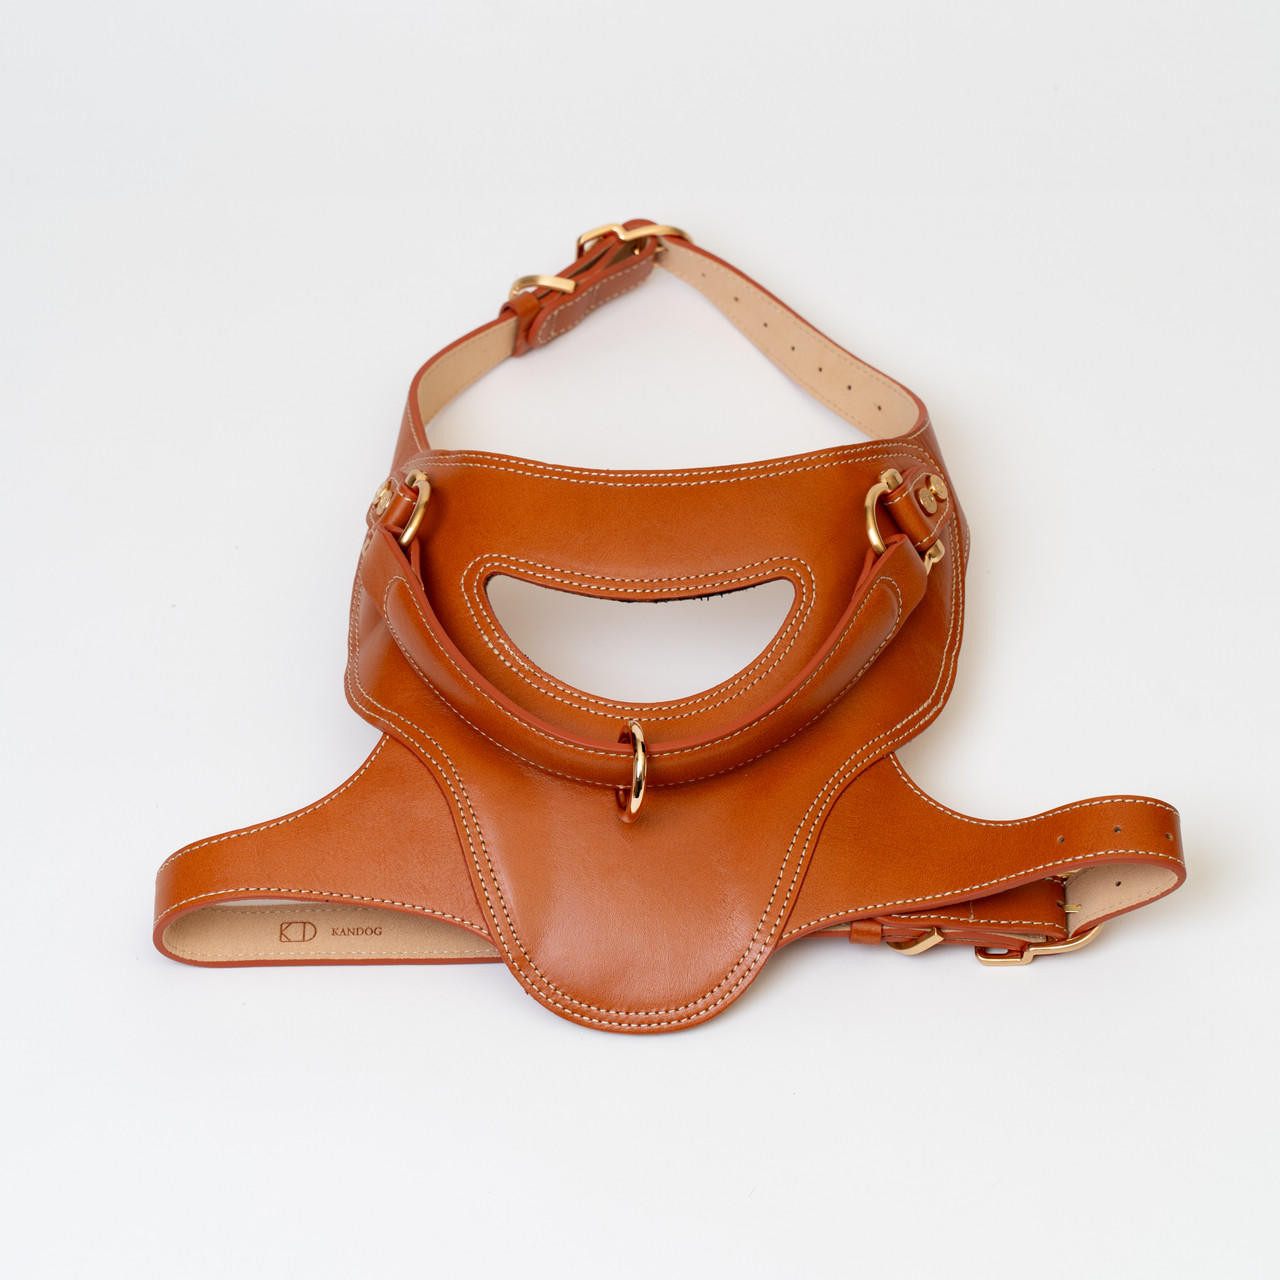  Kandog Leather Toscana Harness 